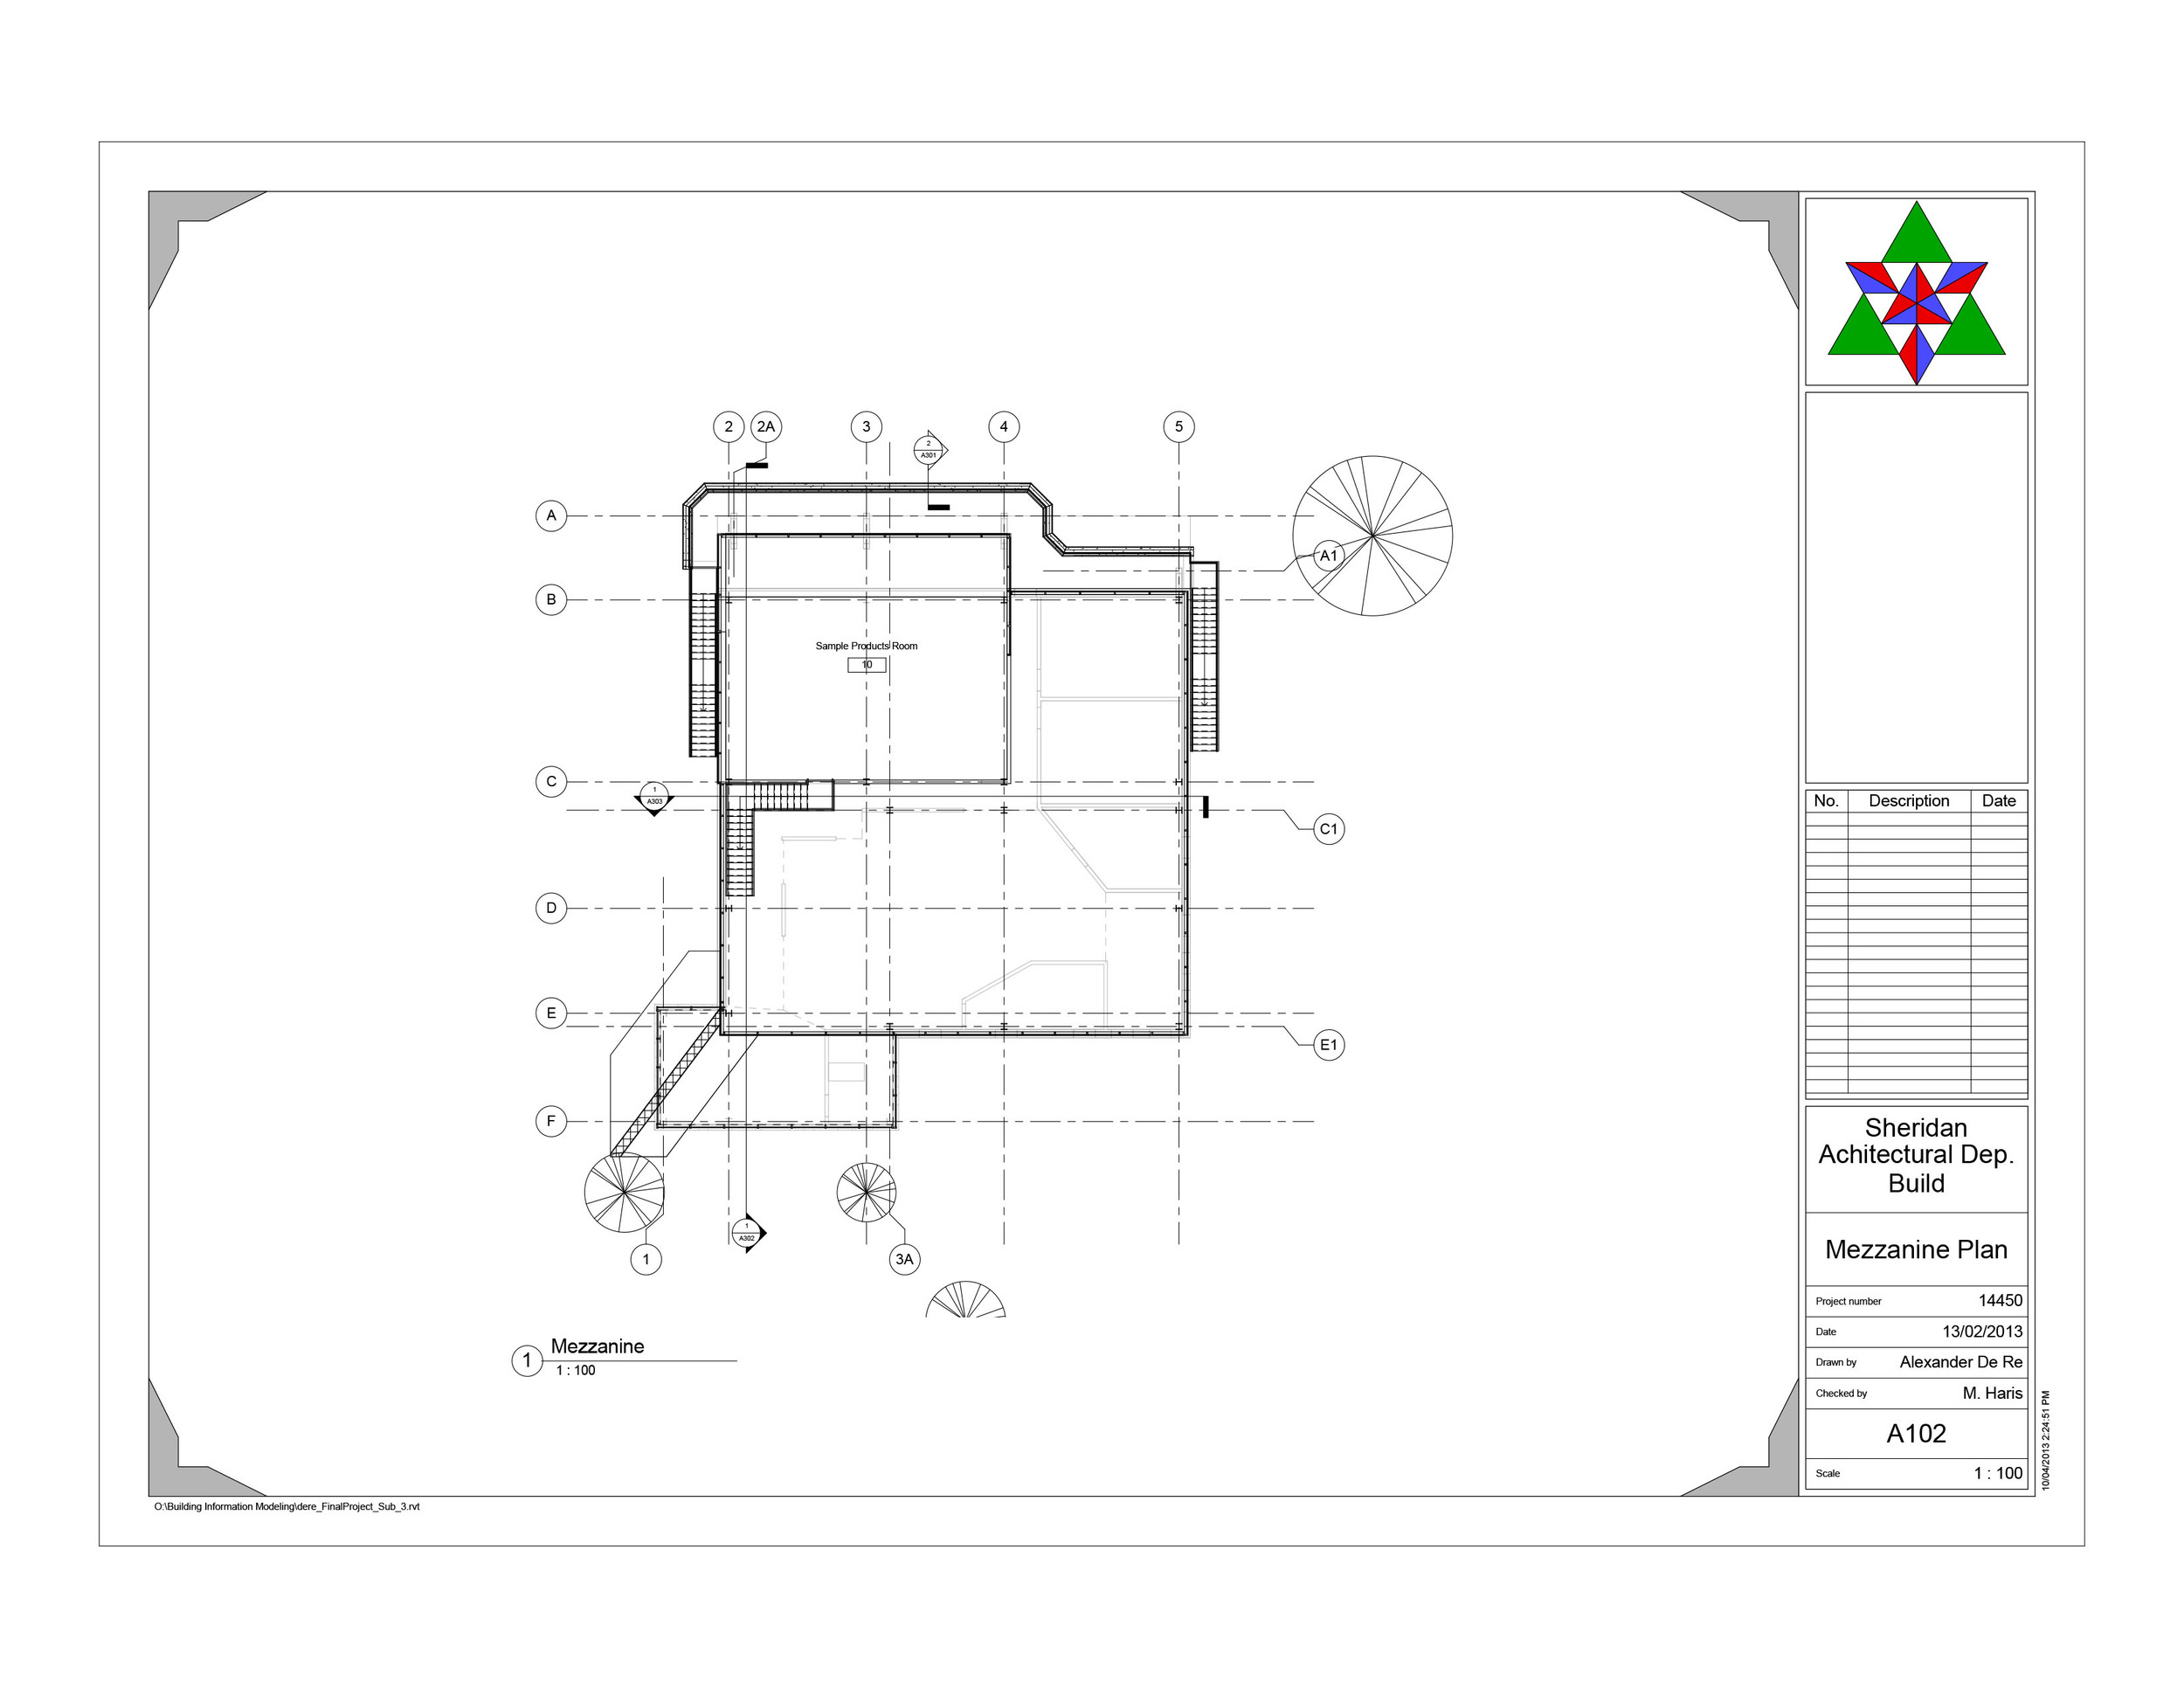 dere_FinalProject  - Sheet - A102 - Mezzanine Plan.jpg